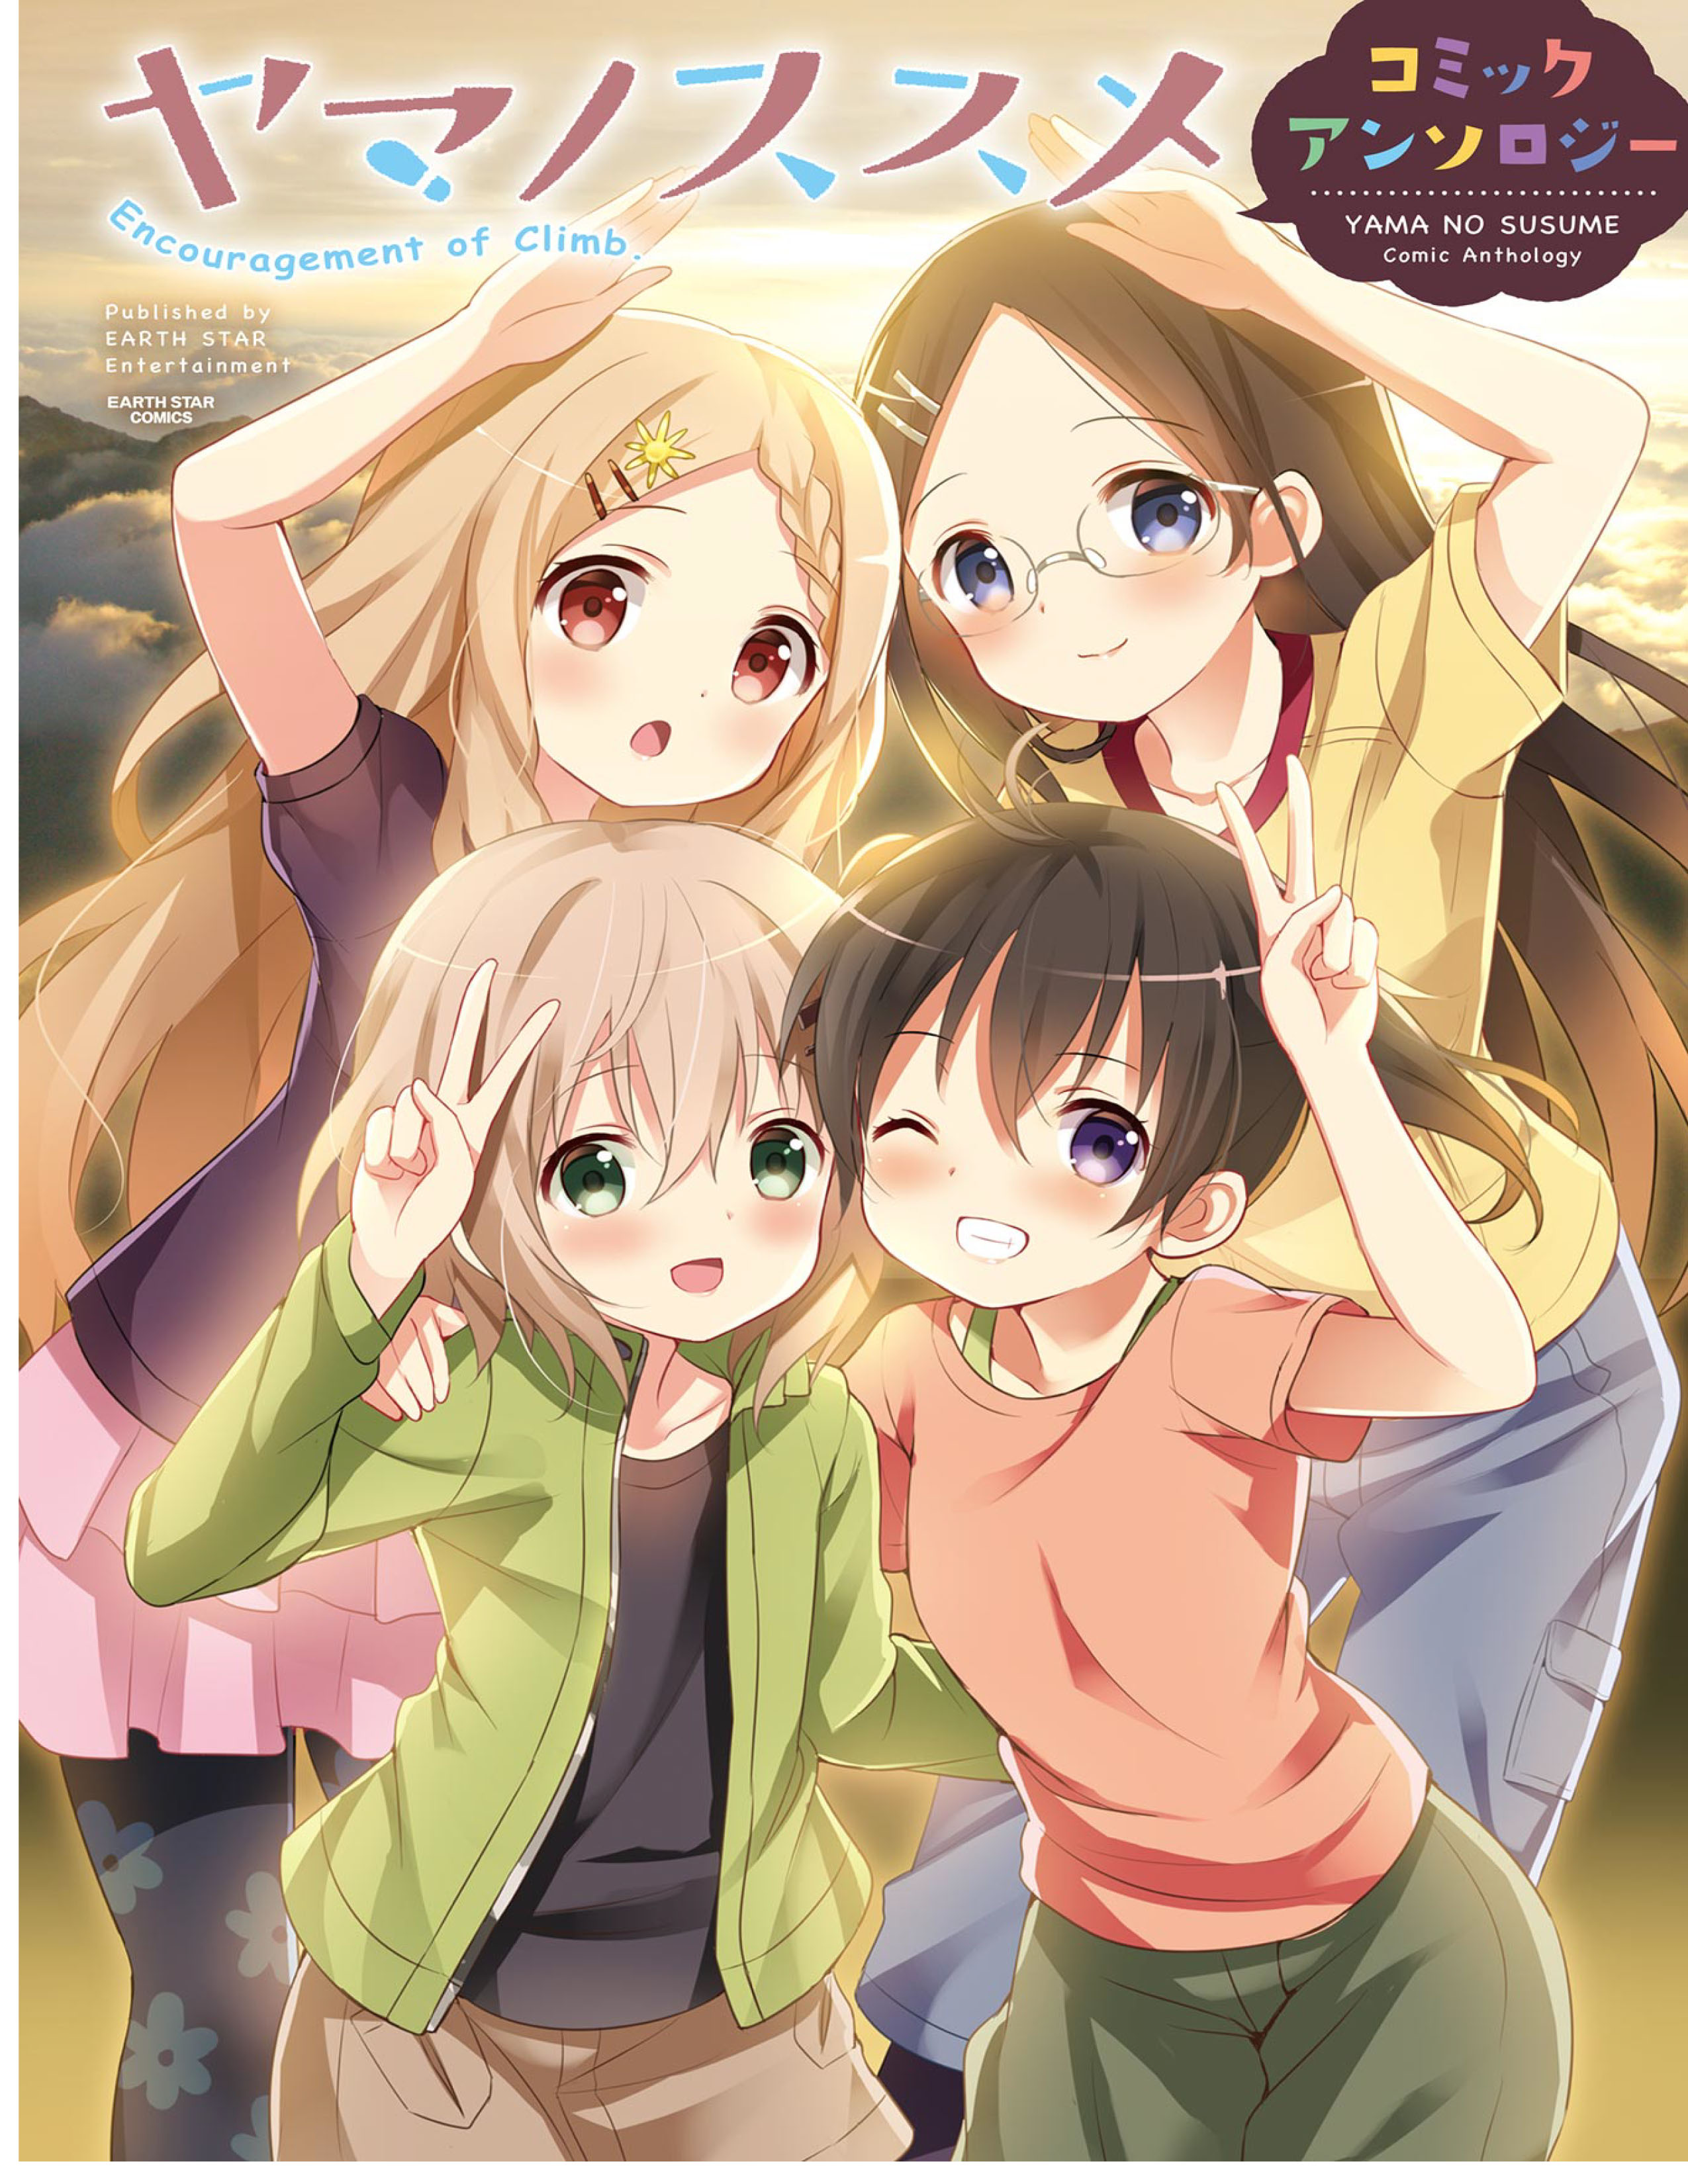 Yama No Susume Manga - Read the Latest Issues high-quality